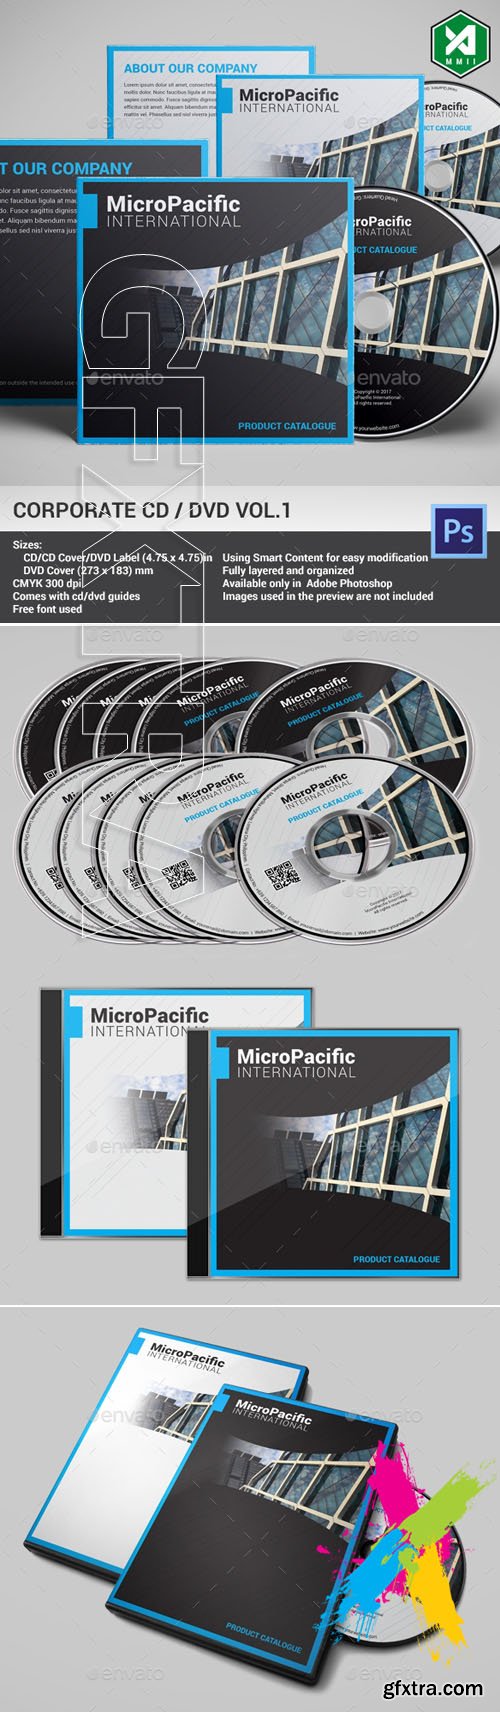 Graphicriver - Corporate CD / DVD Template Vol 1 19910090